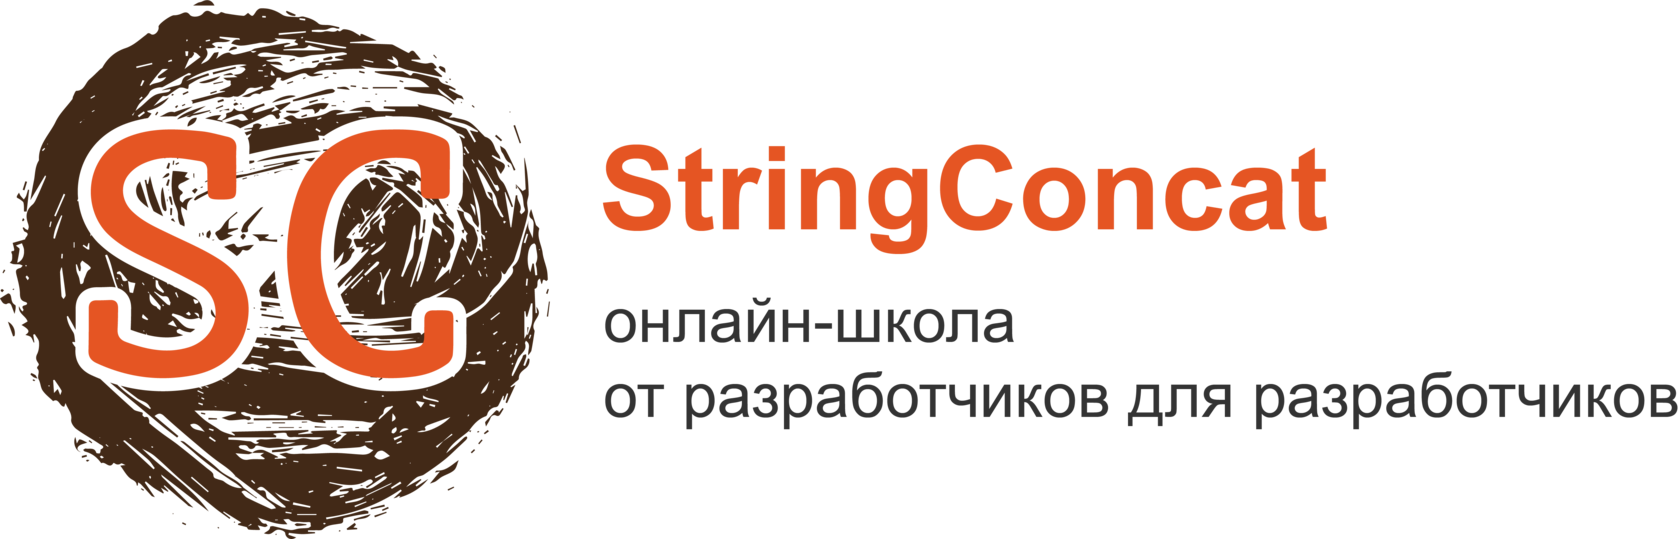 StringConcat